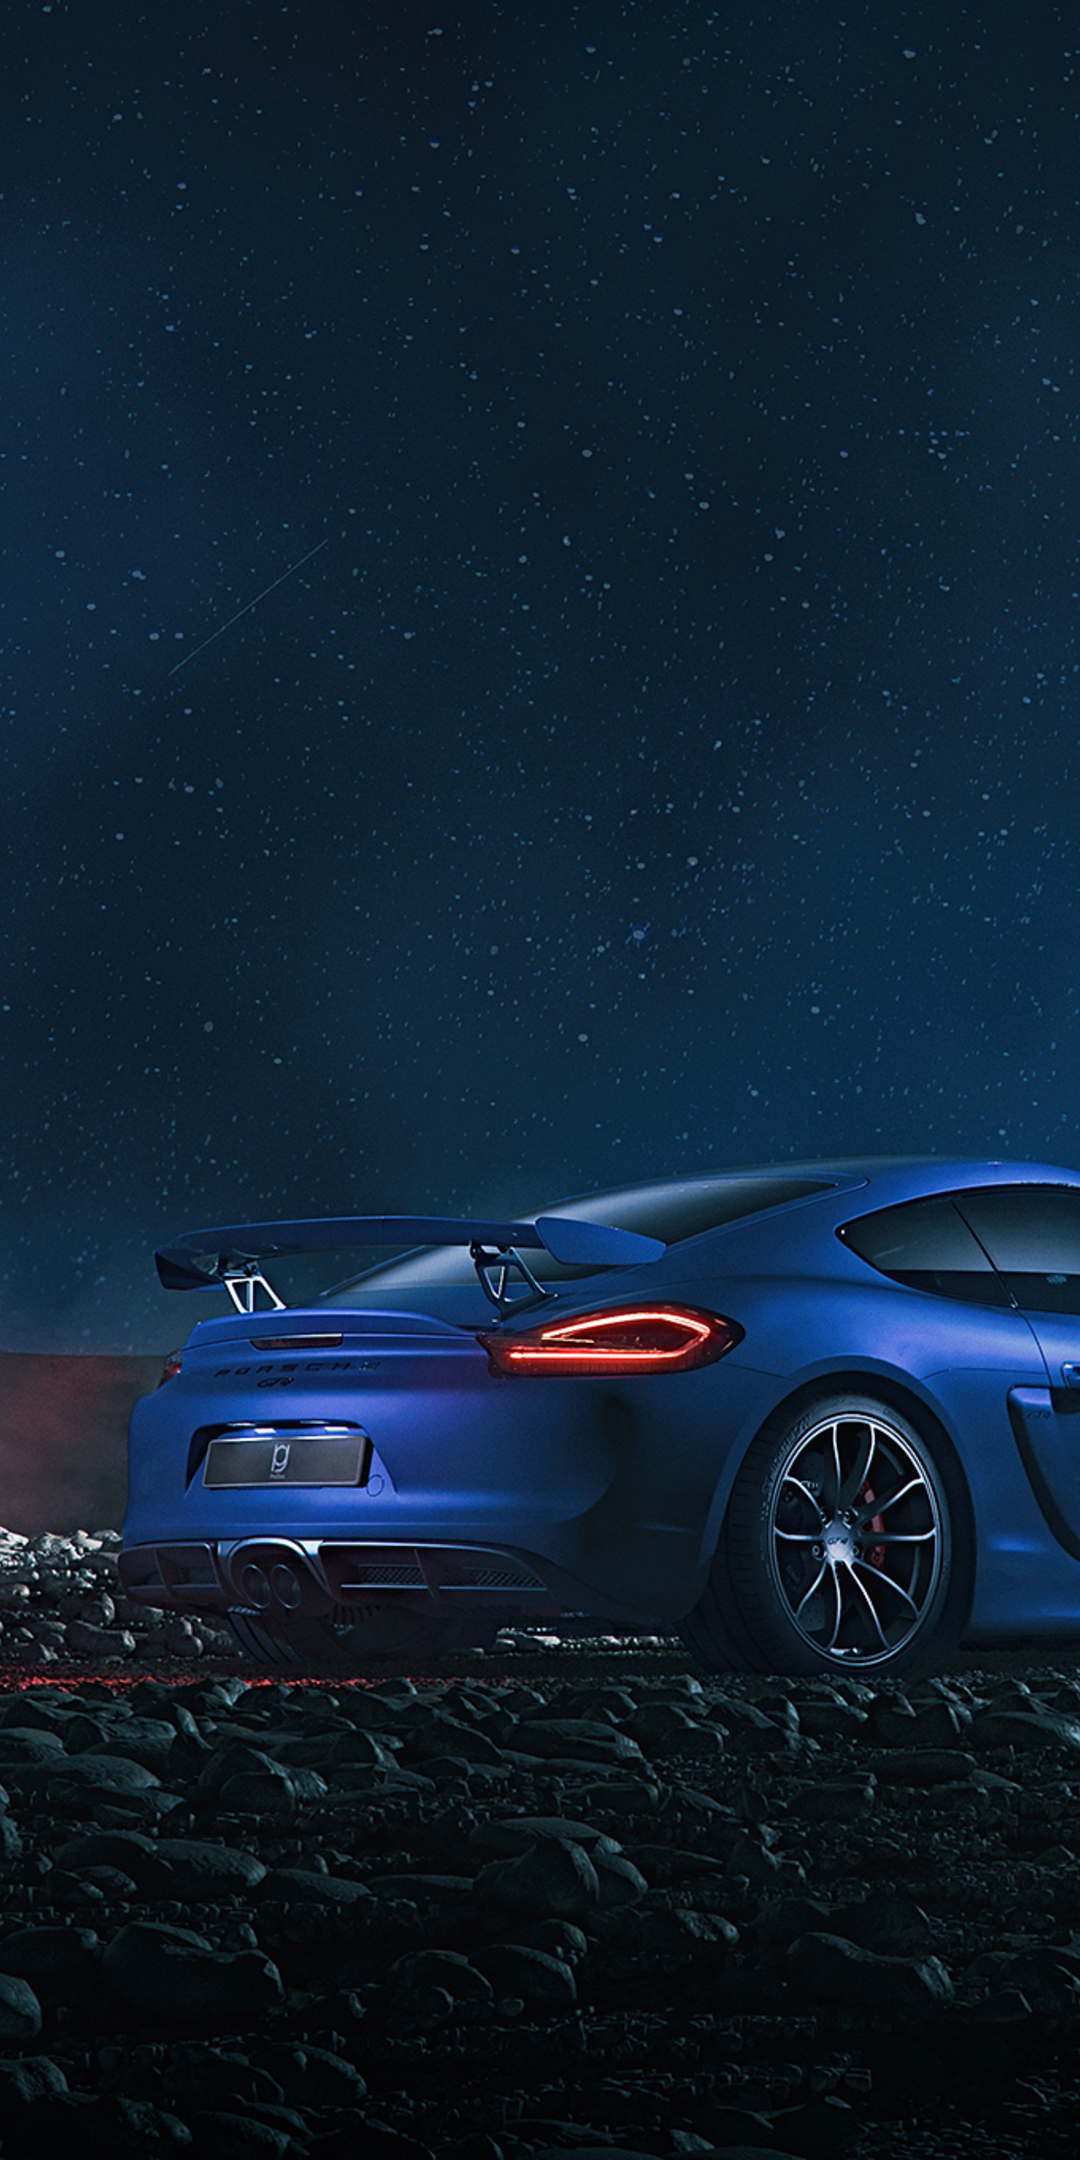 Blue Porsche Fog Play One Plus 5T, Honor 7x, Honor view 10